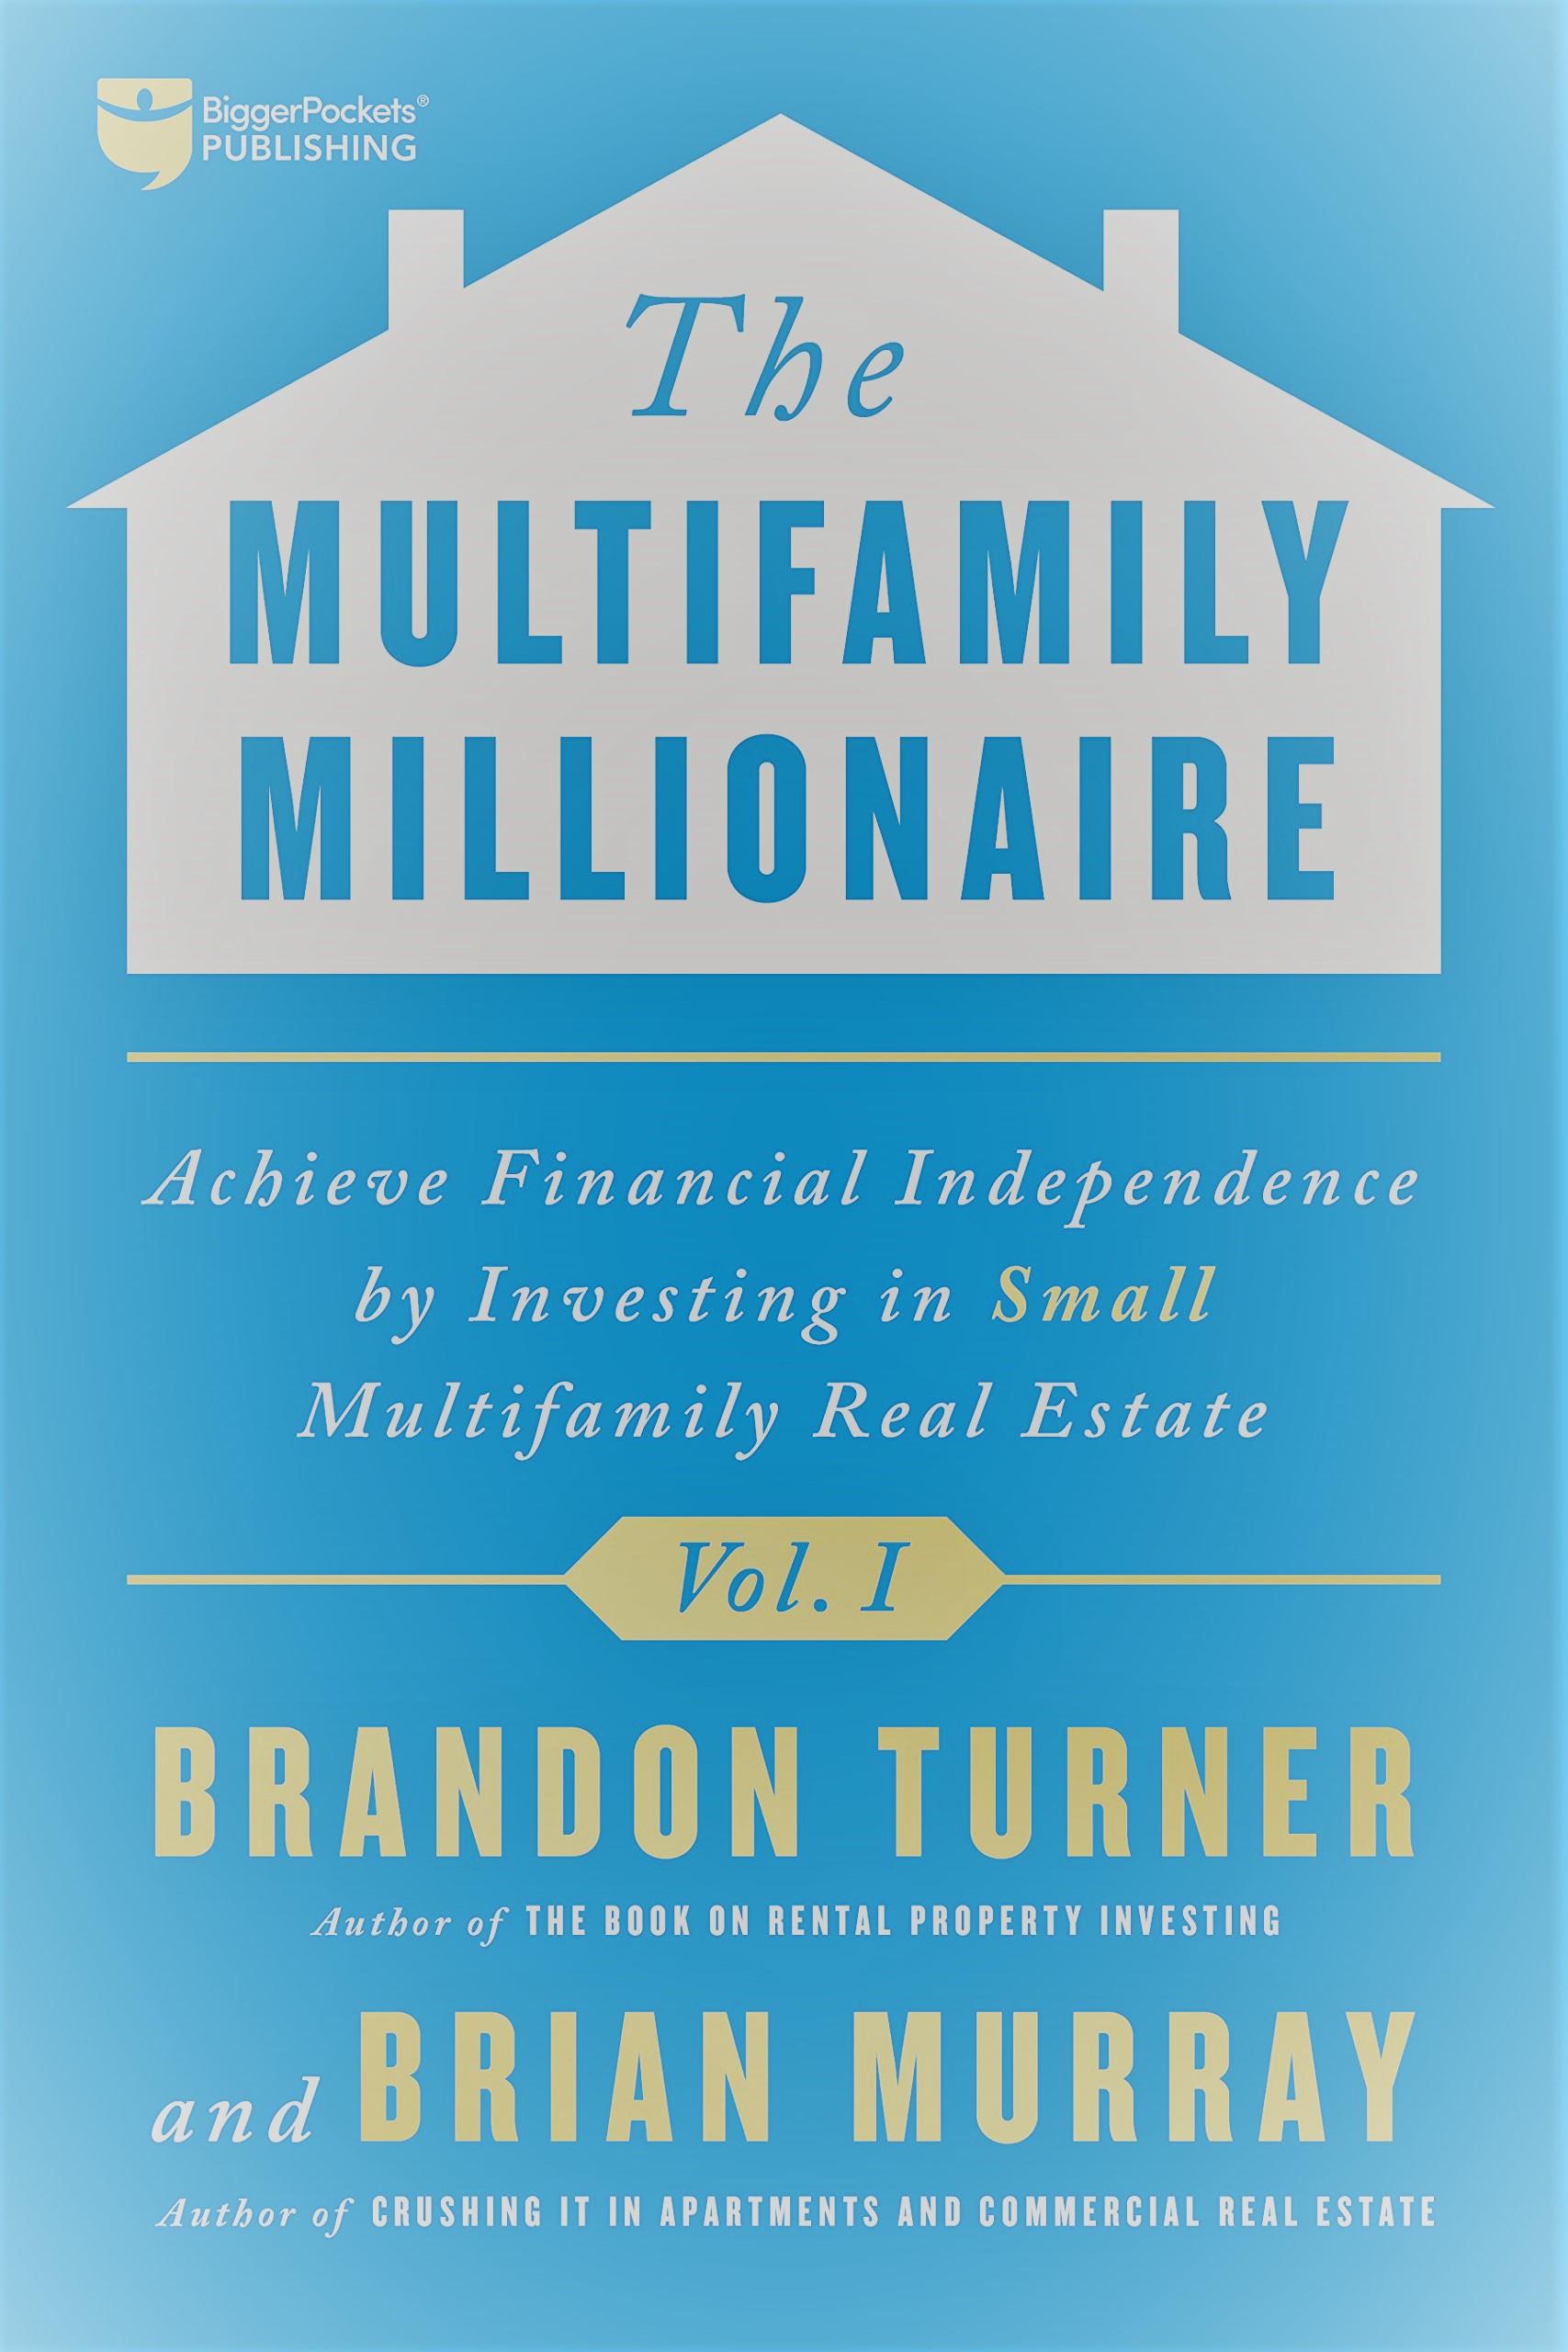 The Multifamily Millionaire, Volume I